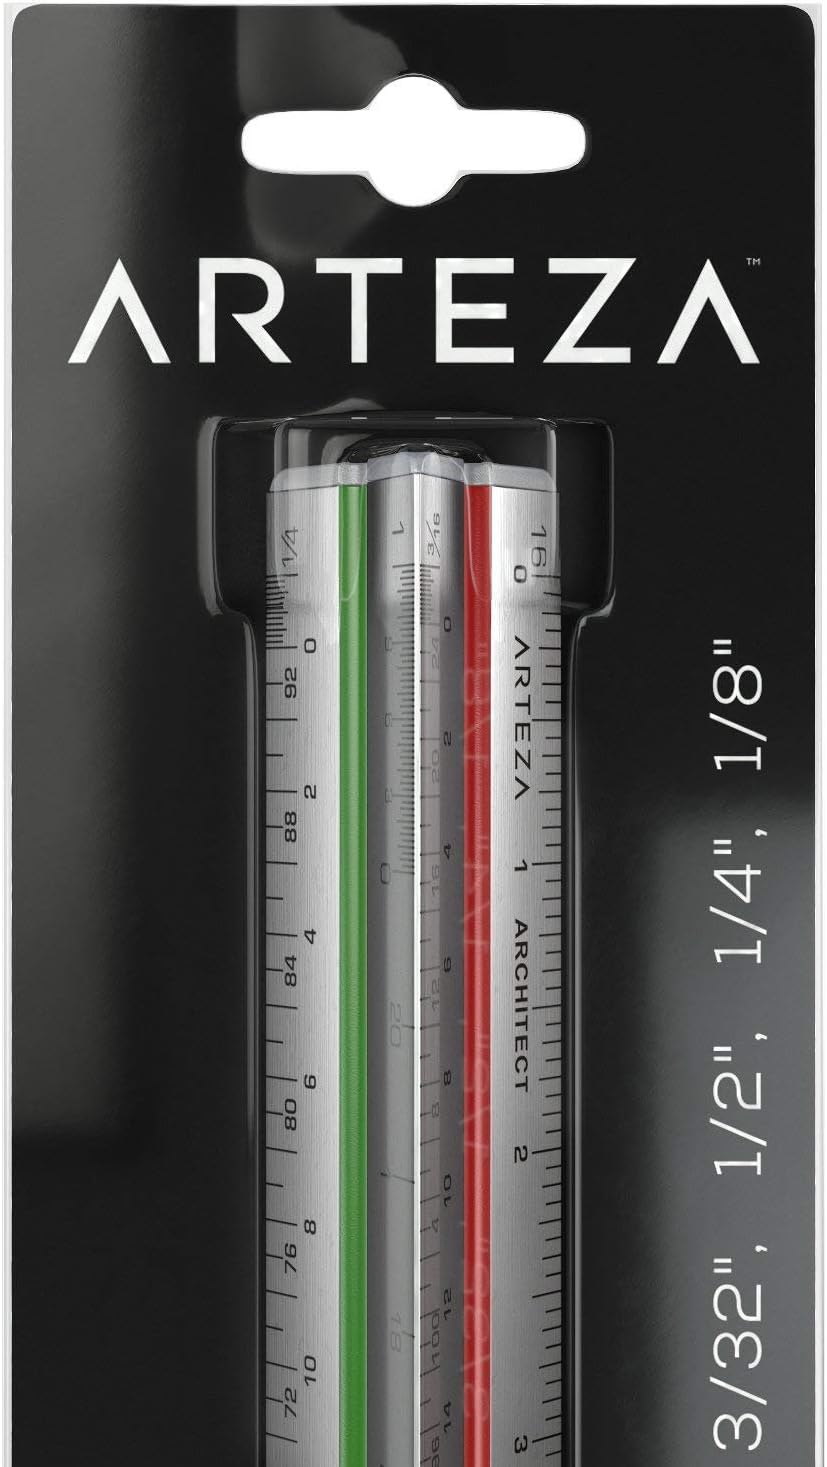 Arteza Aluminum Architect Scale